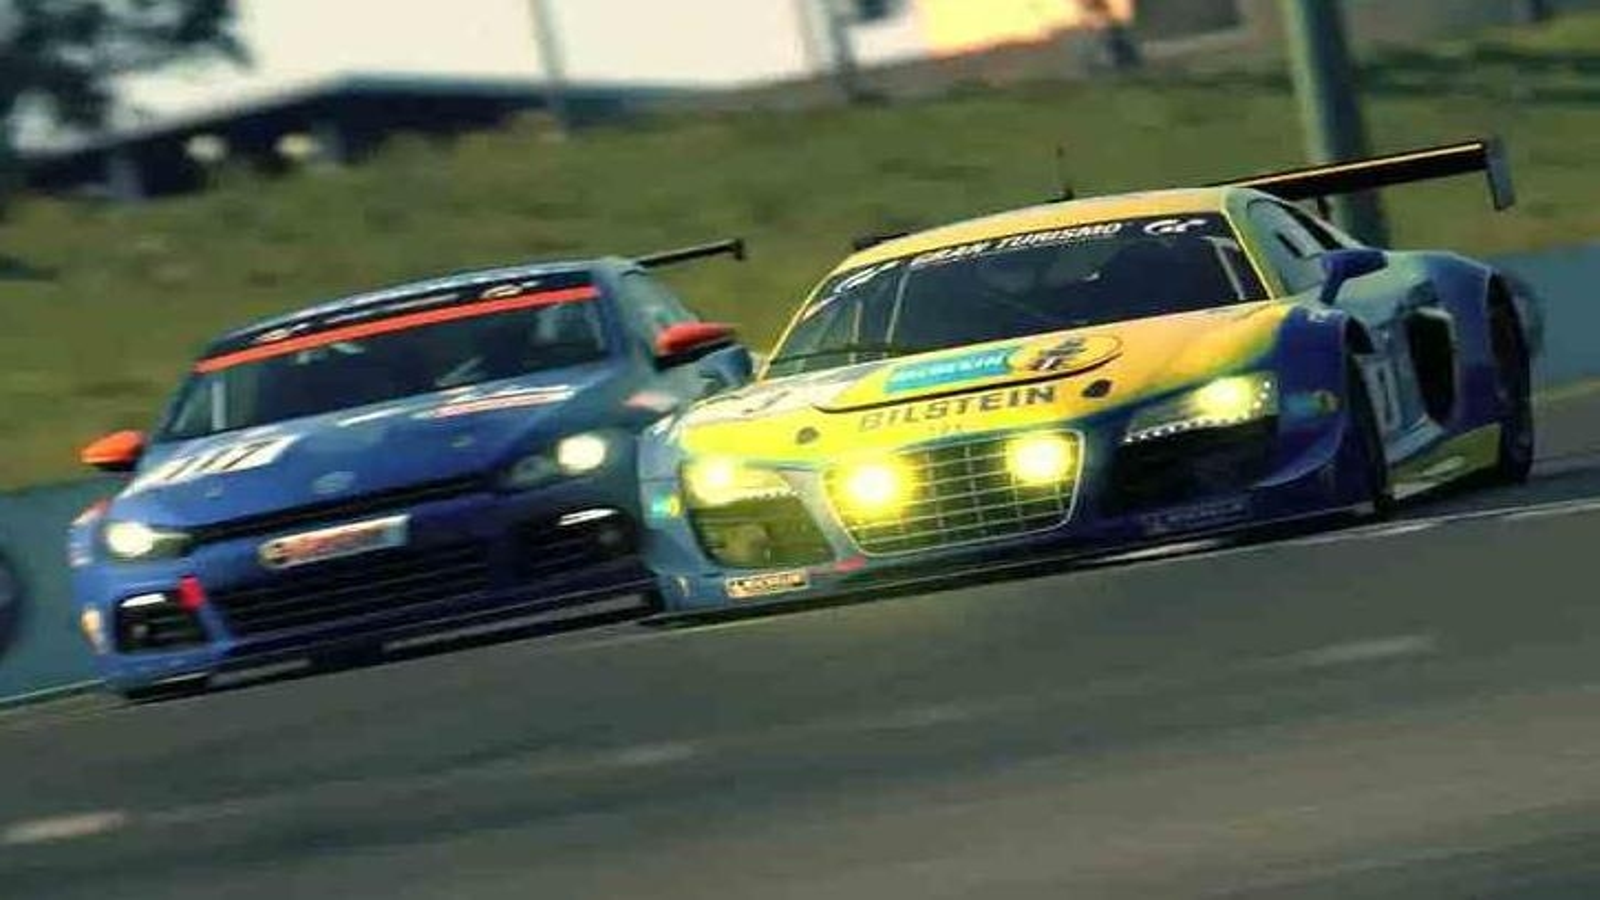 Vídeo compara: GT Sport (PS4) vs. Gran Turismo 6 (PS3)